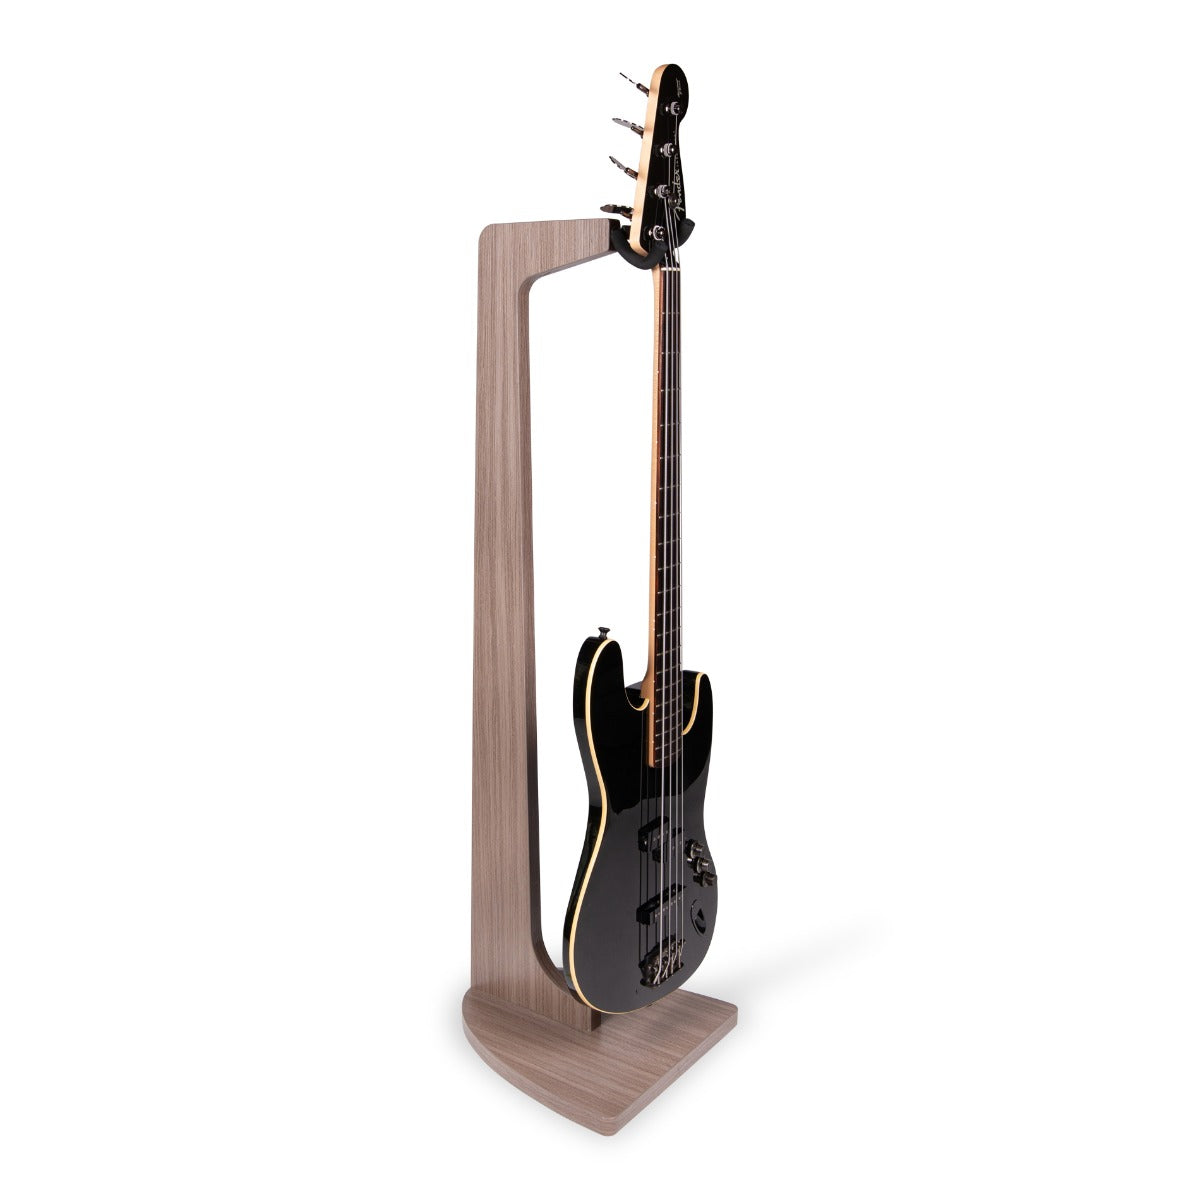 Gator Frameworks Elite Series Hanging Guitar Stand - Grey, View 12